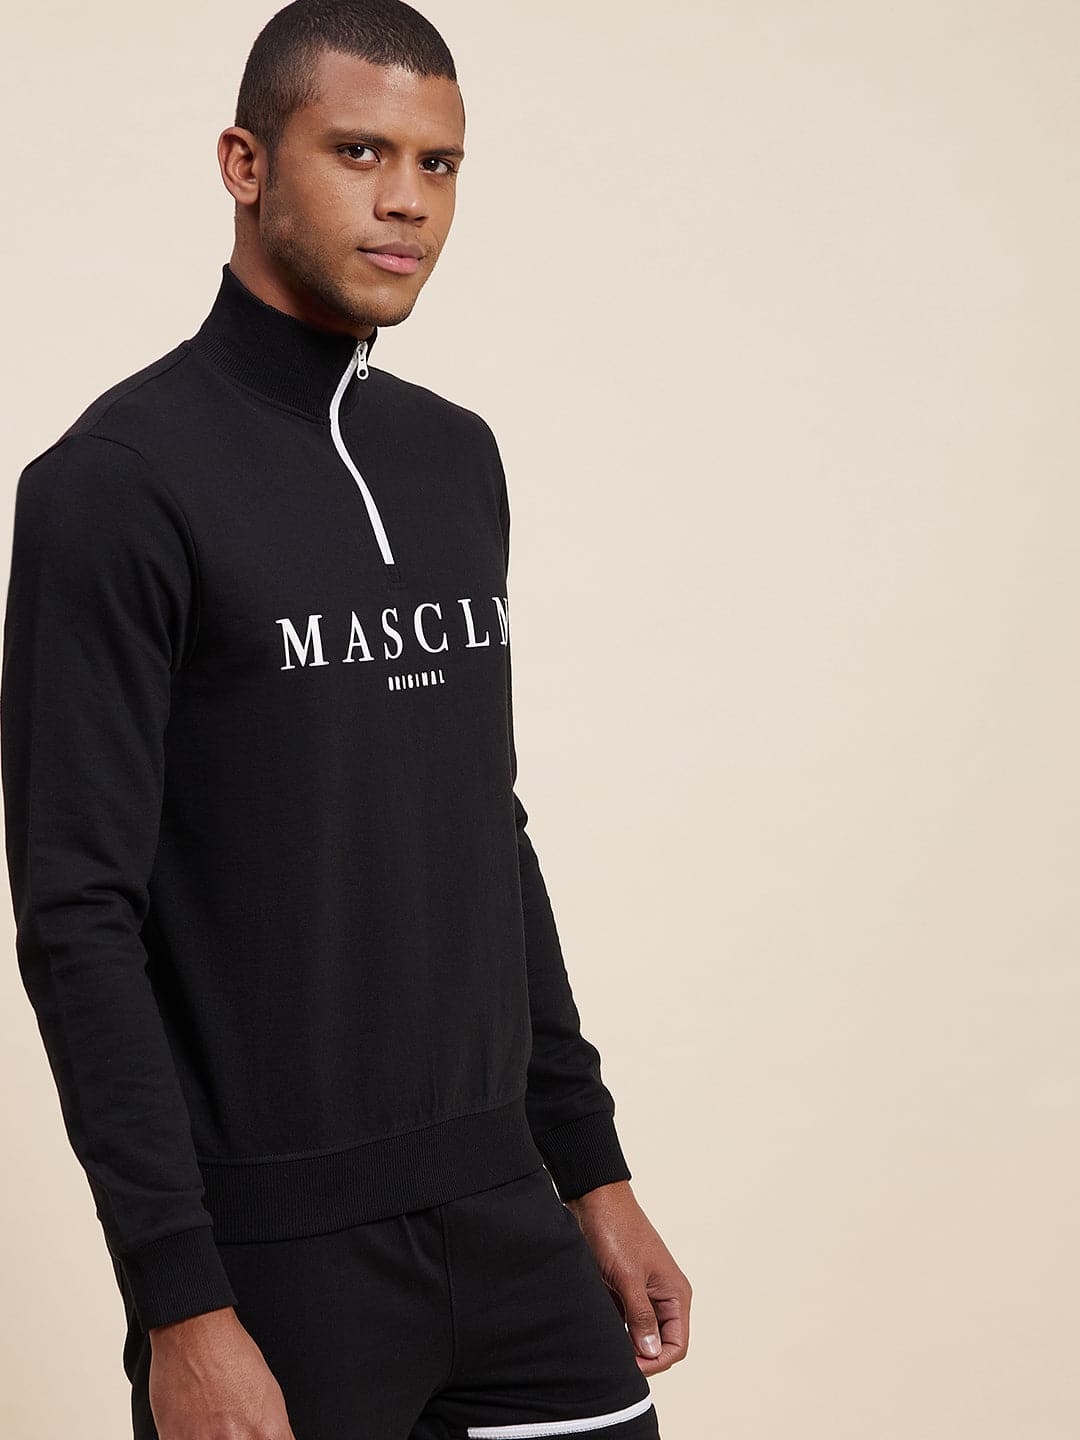 Men's Black High Neck Half Zipper MASCLN Sweatshirt - LYUSH-MASCLN